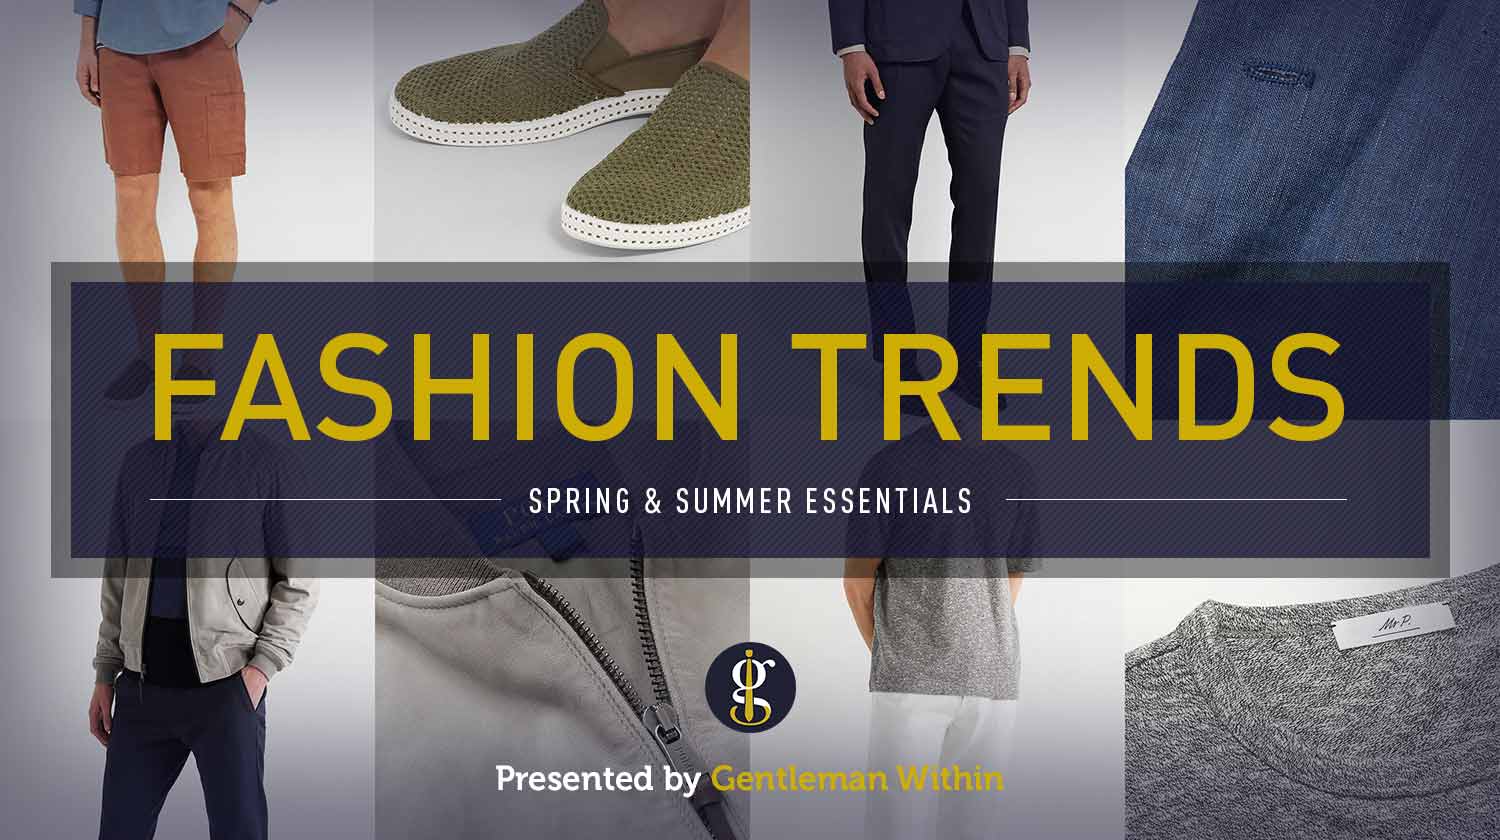 Spring & Summer Fashion Essentials for Men (Timeless Trends) | GENTLEMAN WITHIN